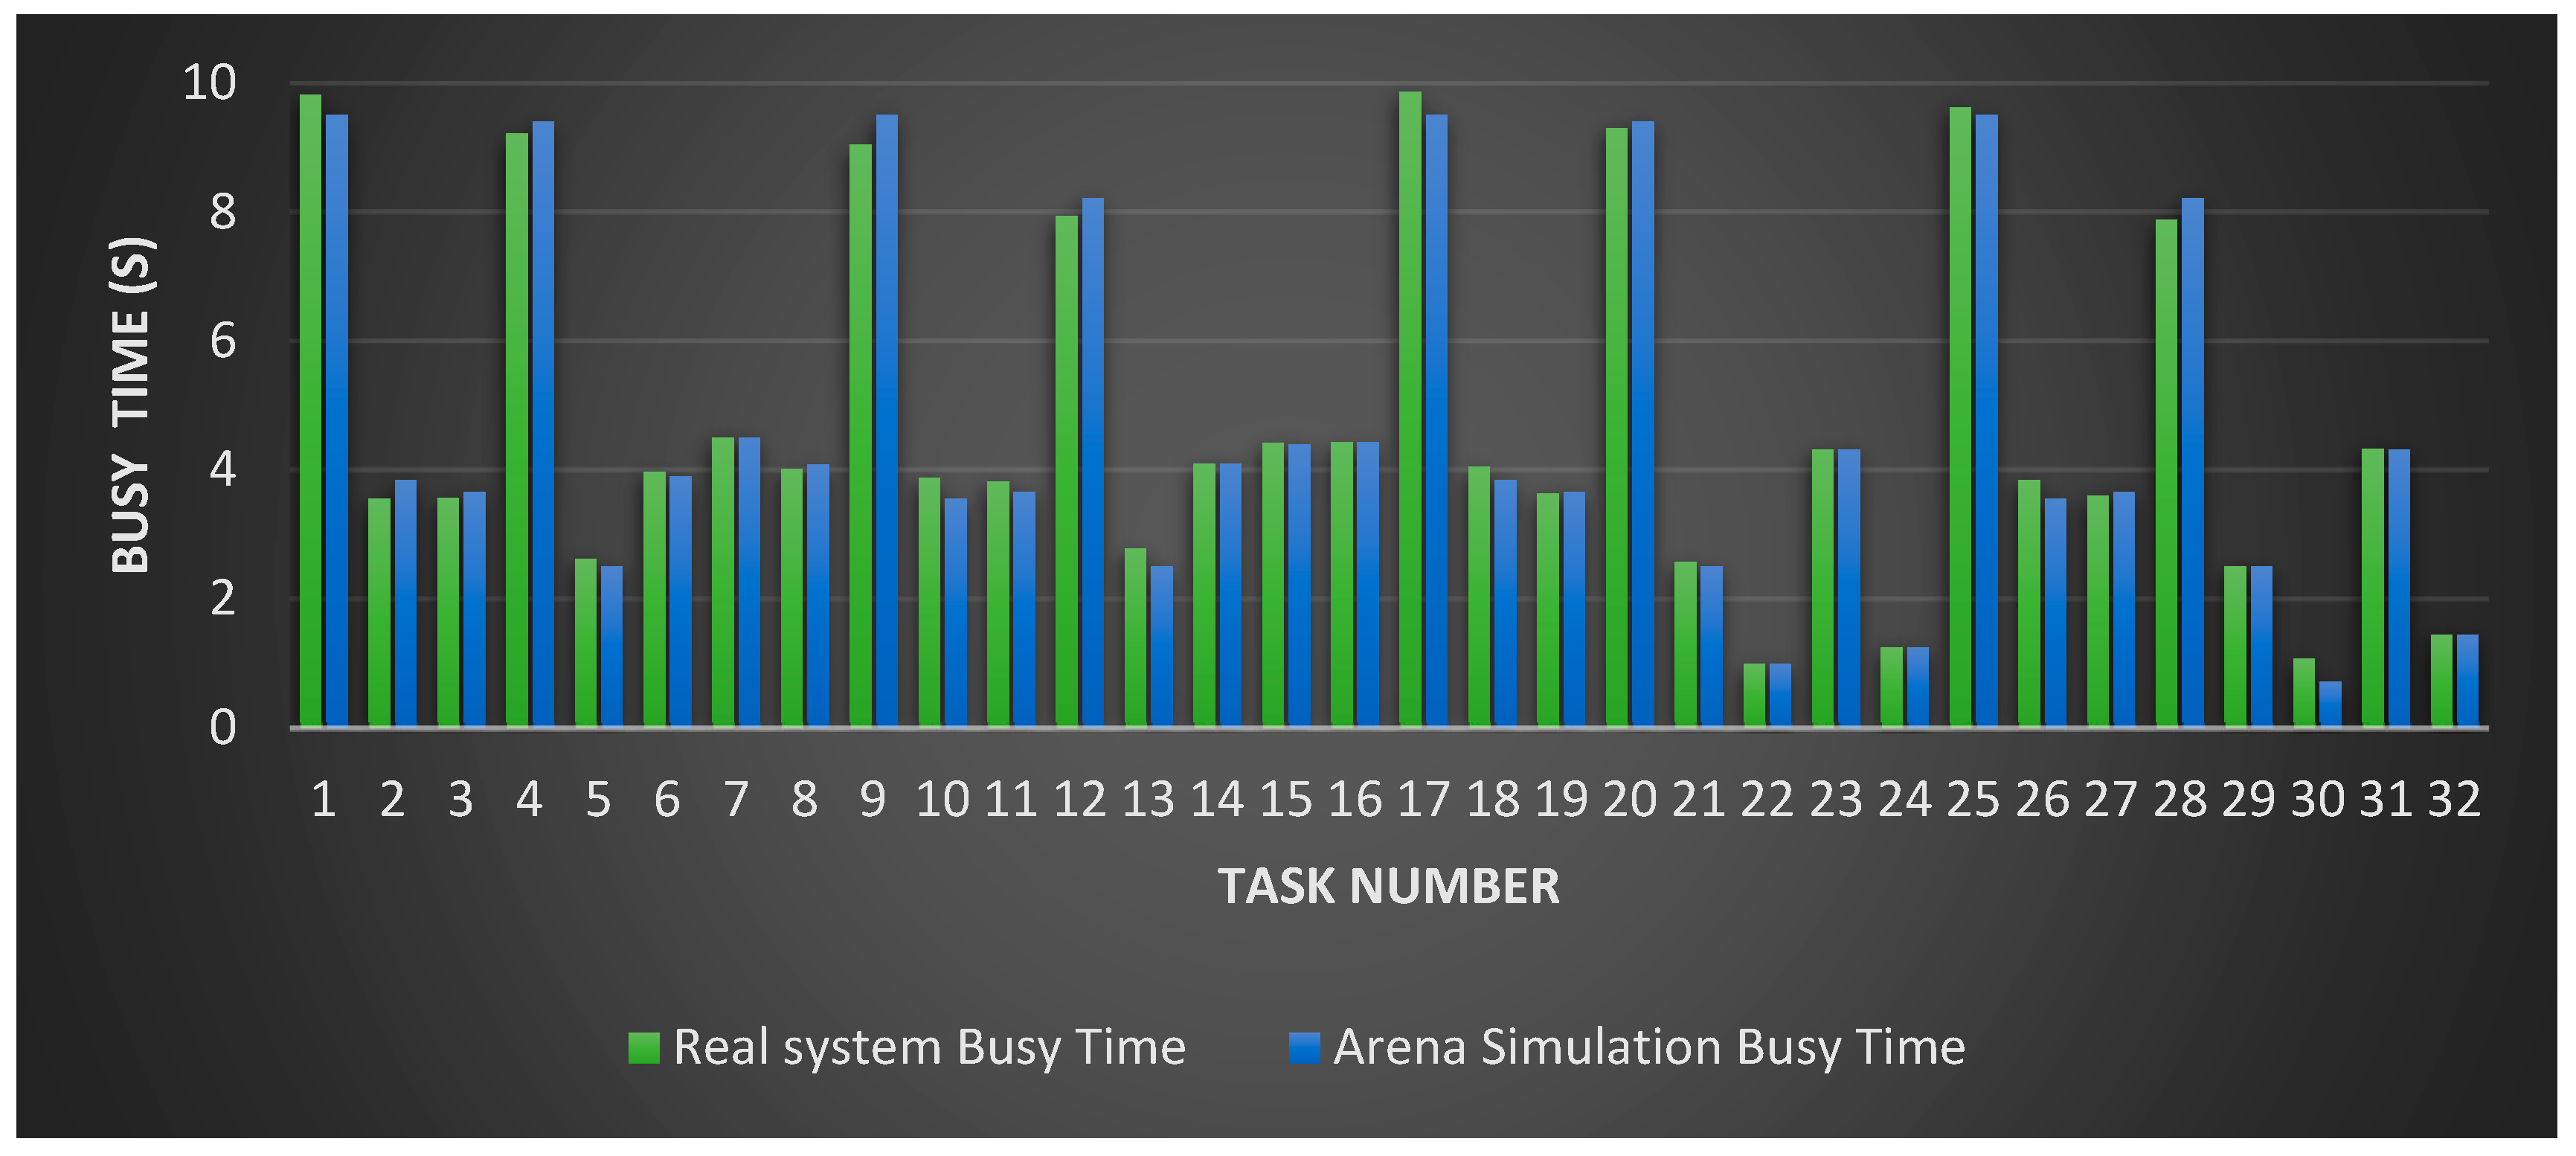 arena simulation software 14 torrent